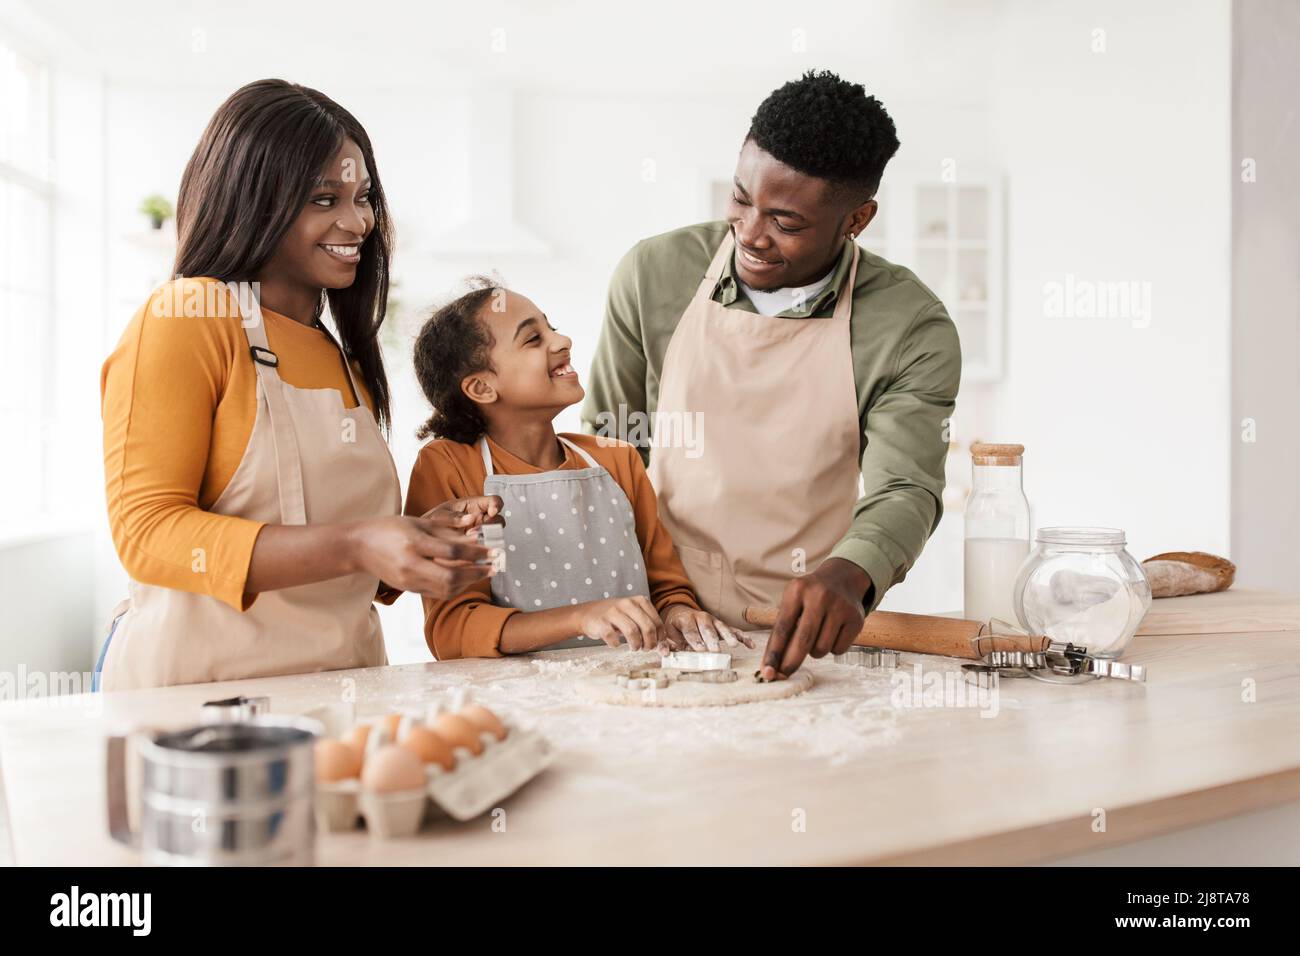 https://c8.alamy.com/comp/2J8TA78/joyful-african-family-baking-pastry-together-making-cookies-in-kitchen-2J8TA78.jpg